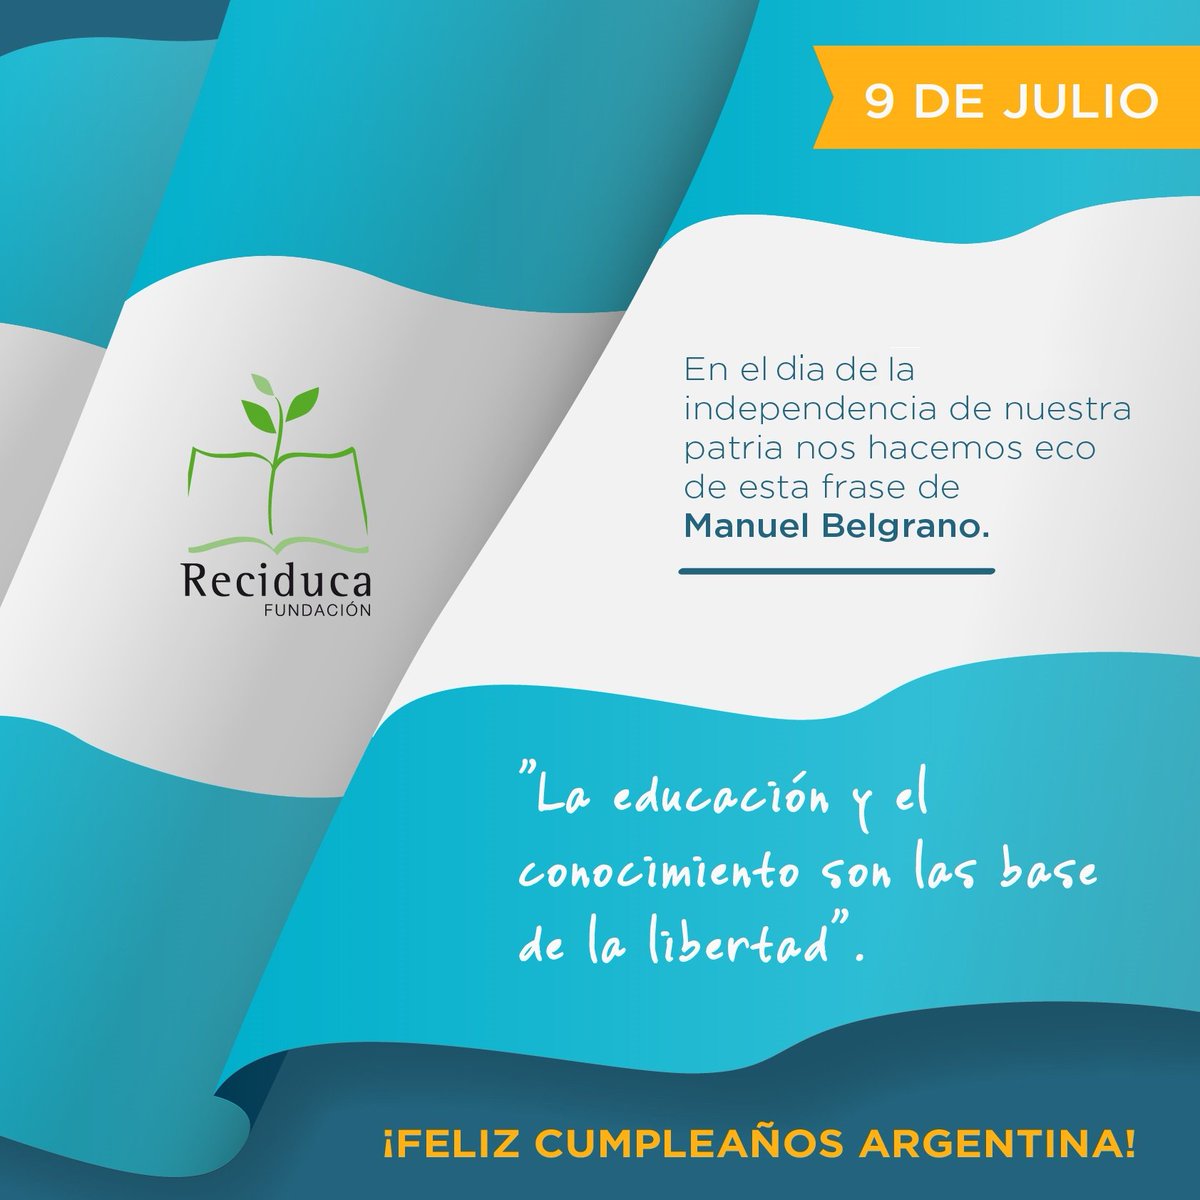 Fundación RECIDUCA on Twitter: 